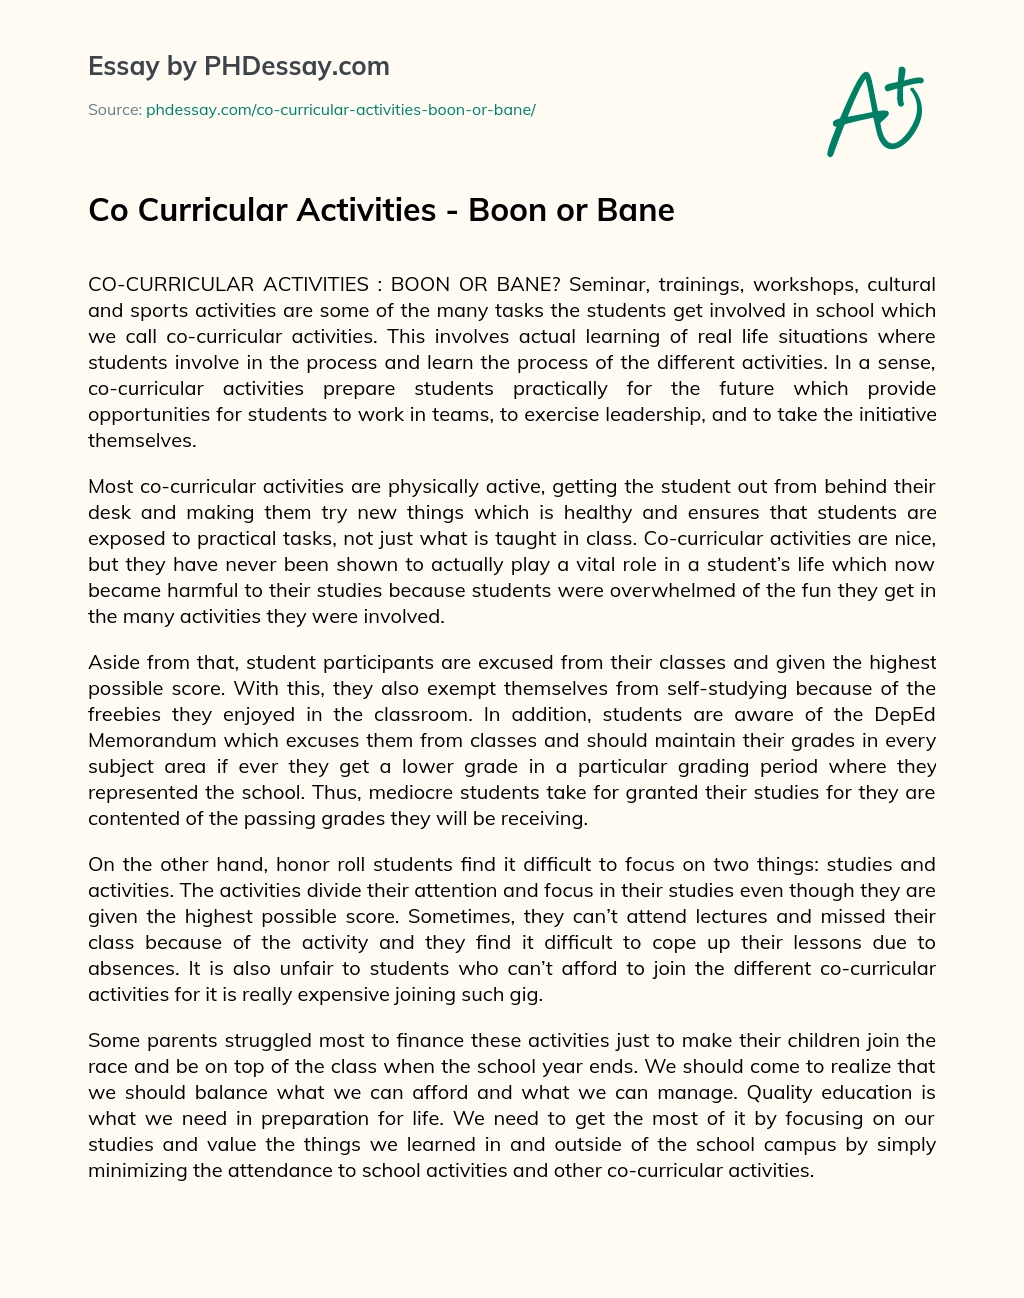 Co Curricular Activities – Boon or Bane essay